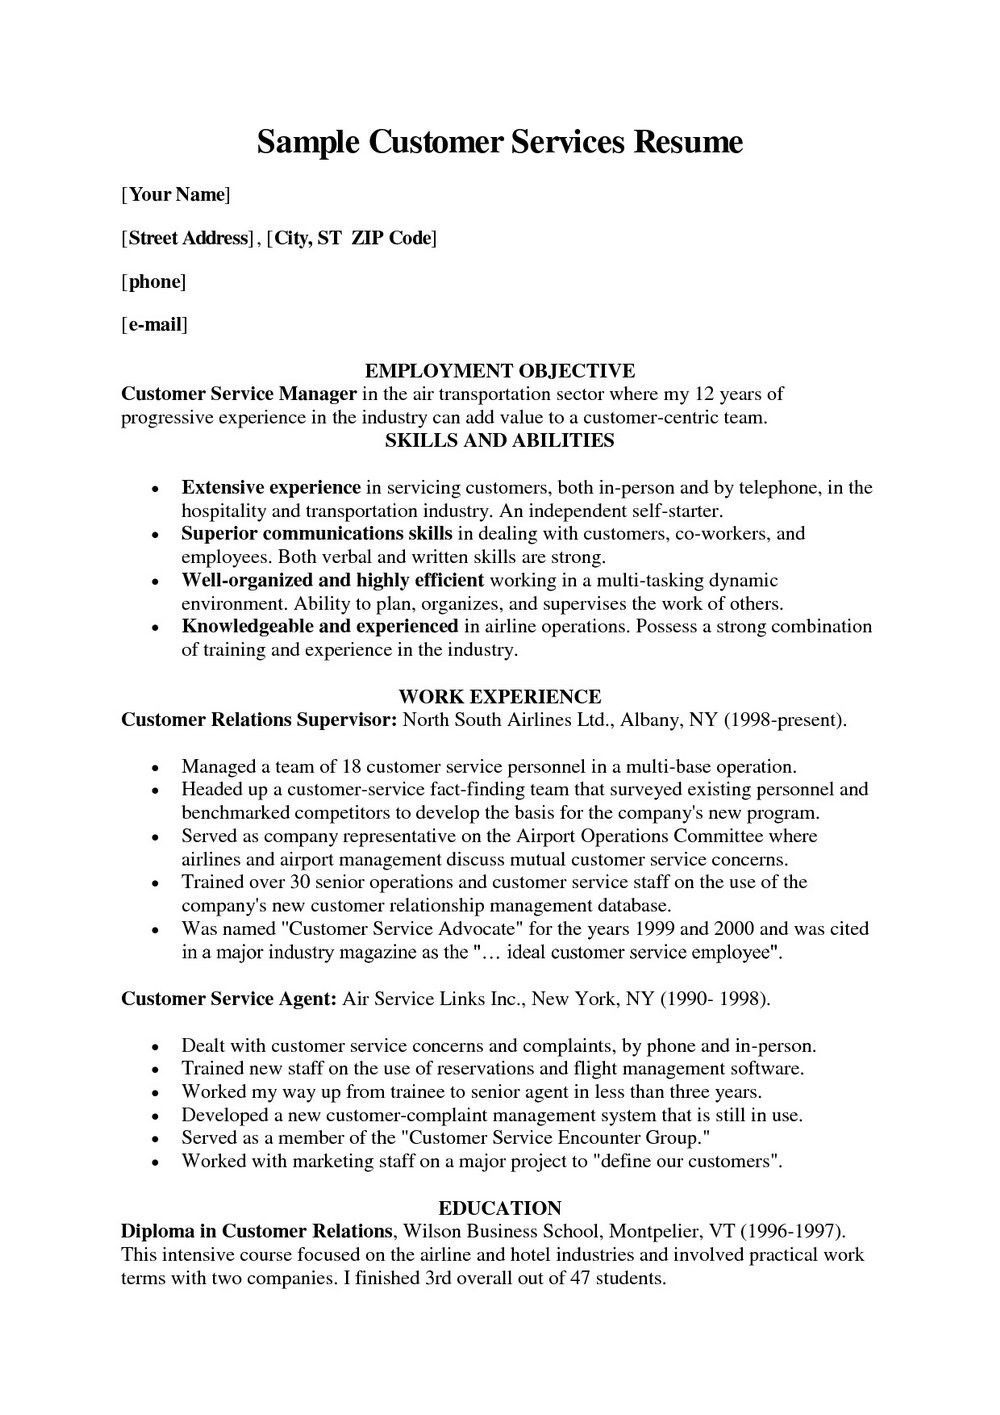 sample resume for customer service representative no experience